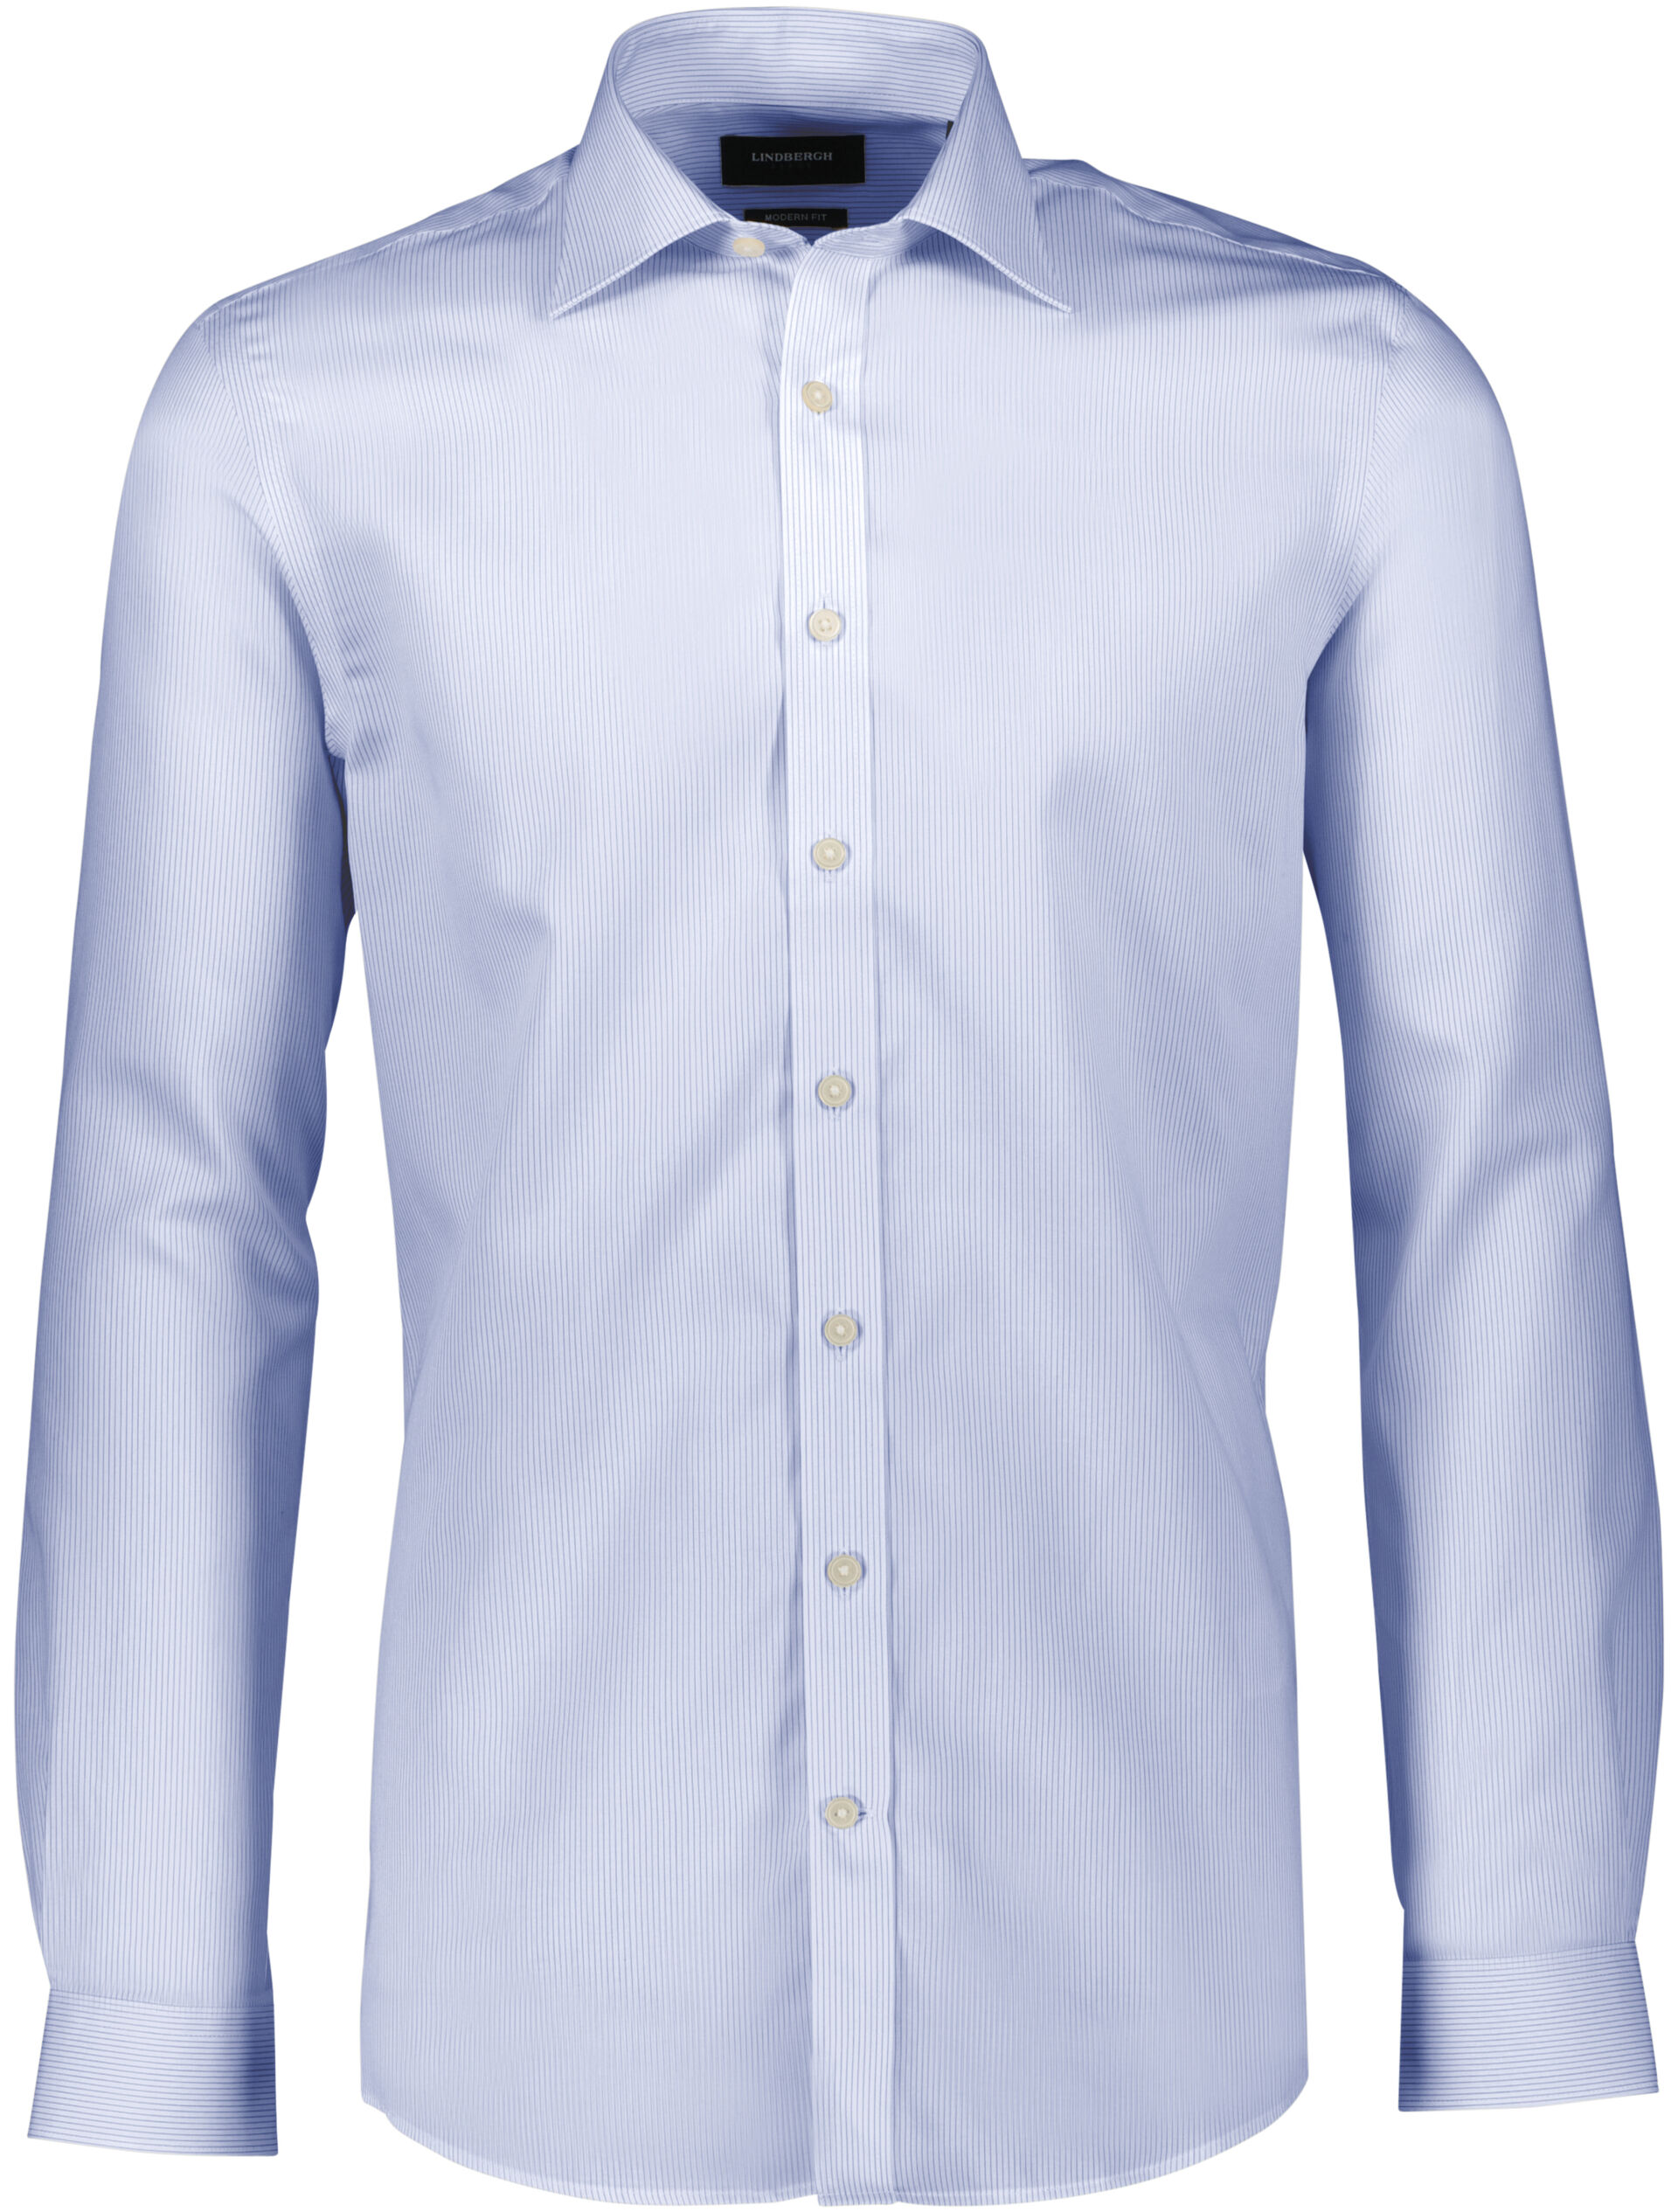 Business casual shirt 30-242144